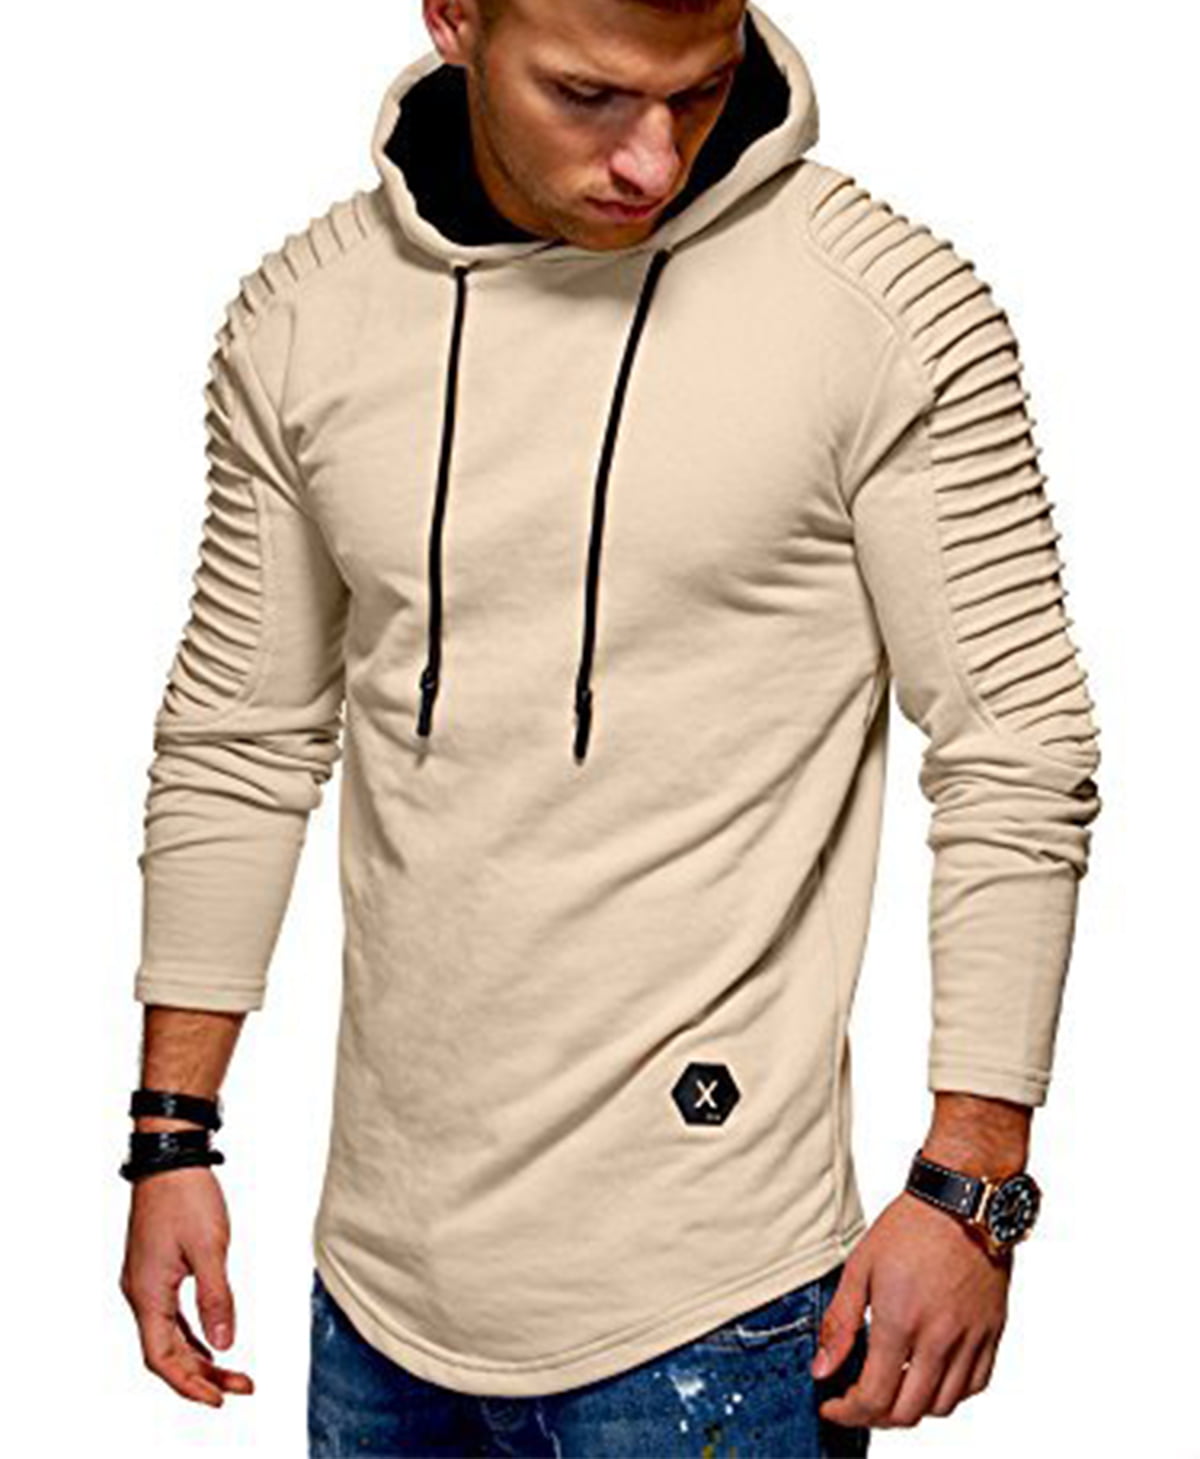 Mens Hoodies Pleated Raglan Lightweight Slim Casual Long Sleeve Solid Hooded Pullover Sweatshirts Outwear Jacket Coats 